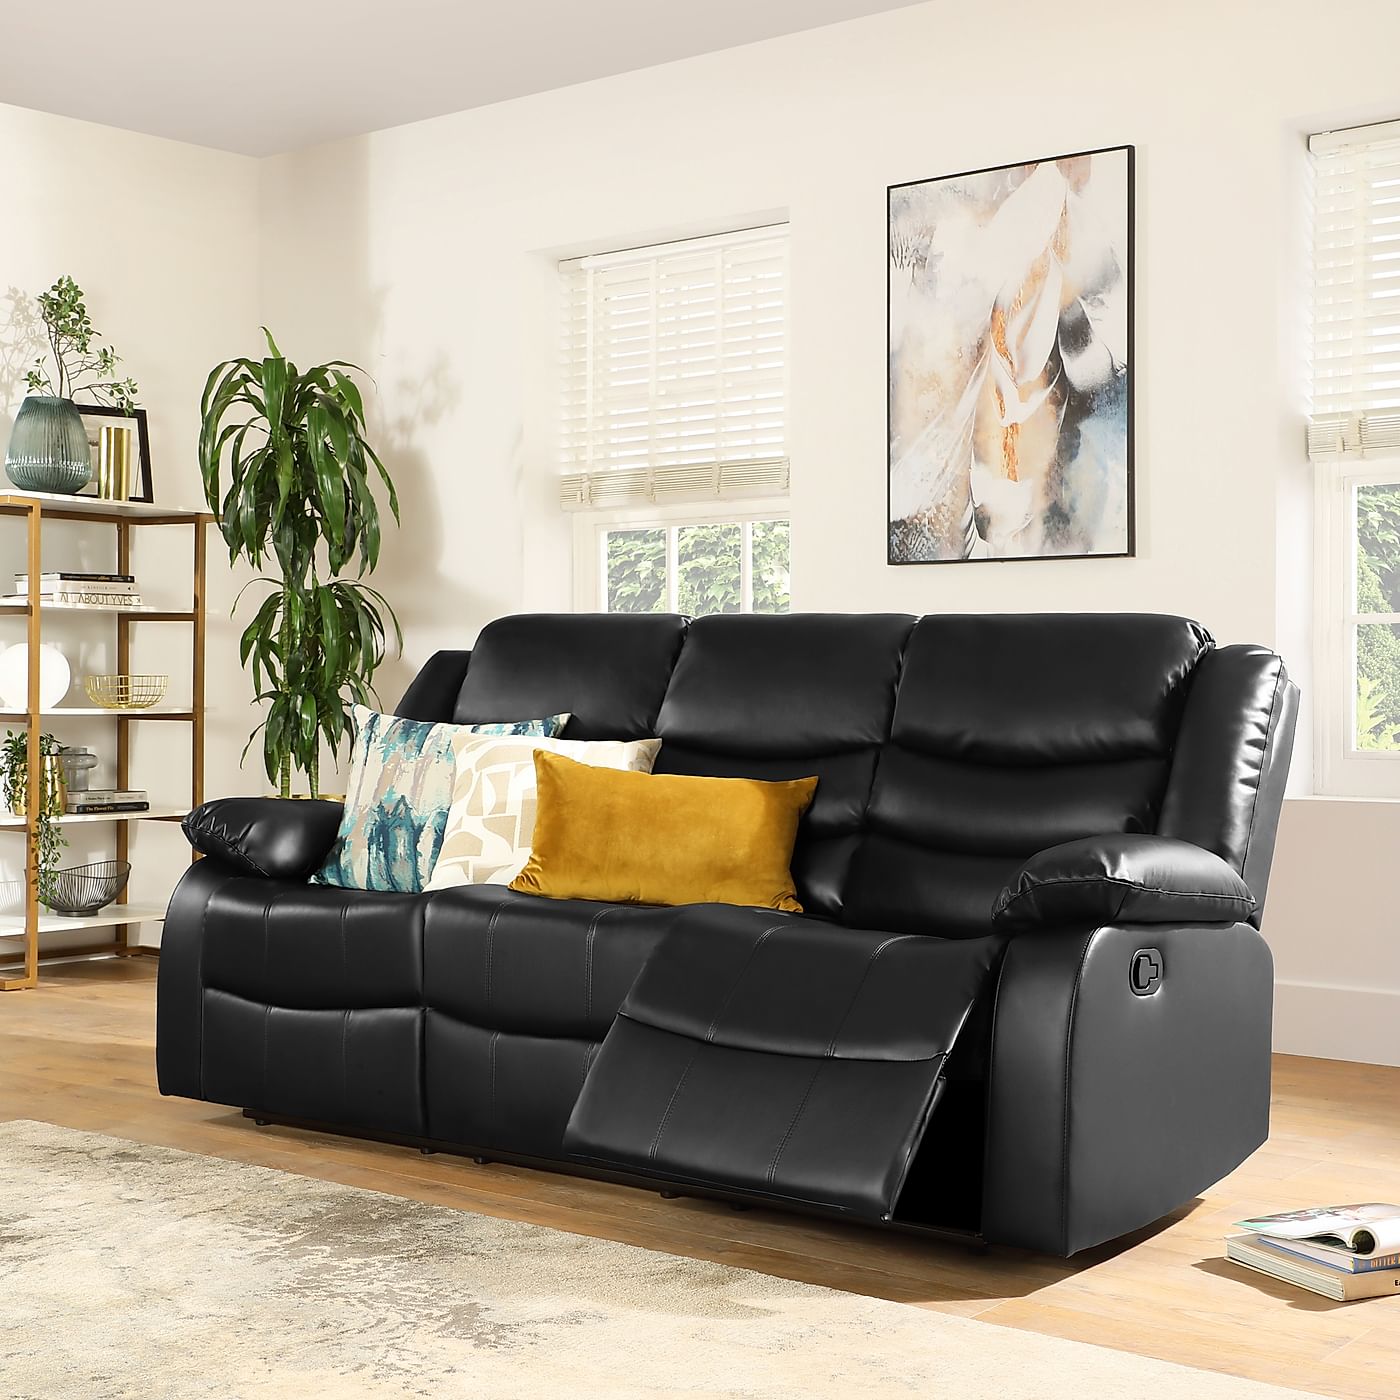 Sorrento Black Leather 3 Seater Recliner Sofa Furniture